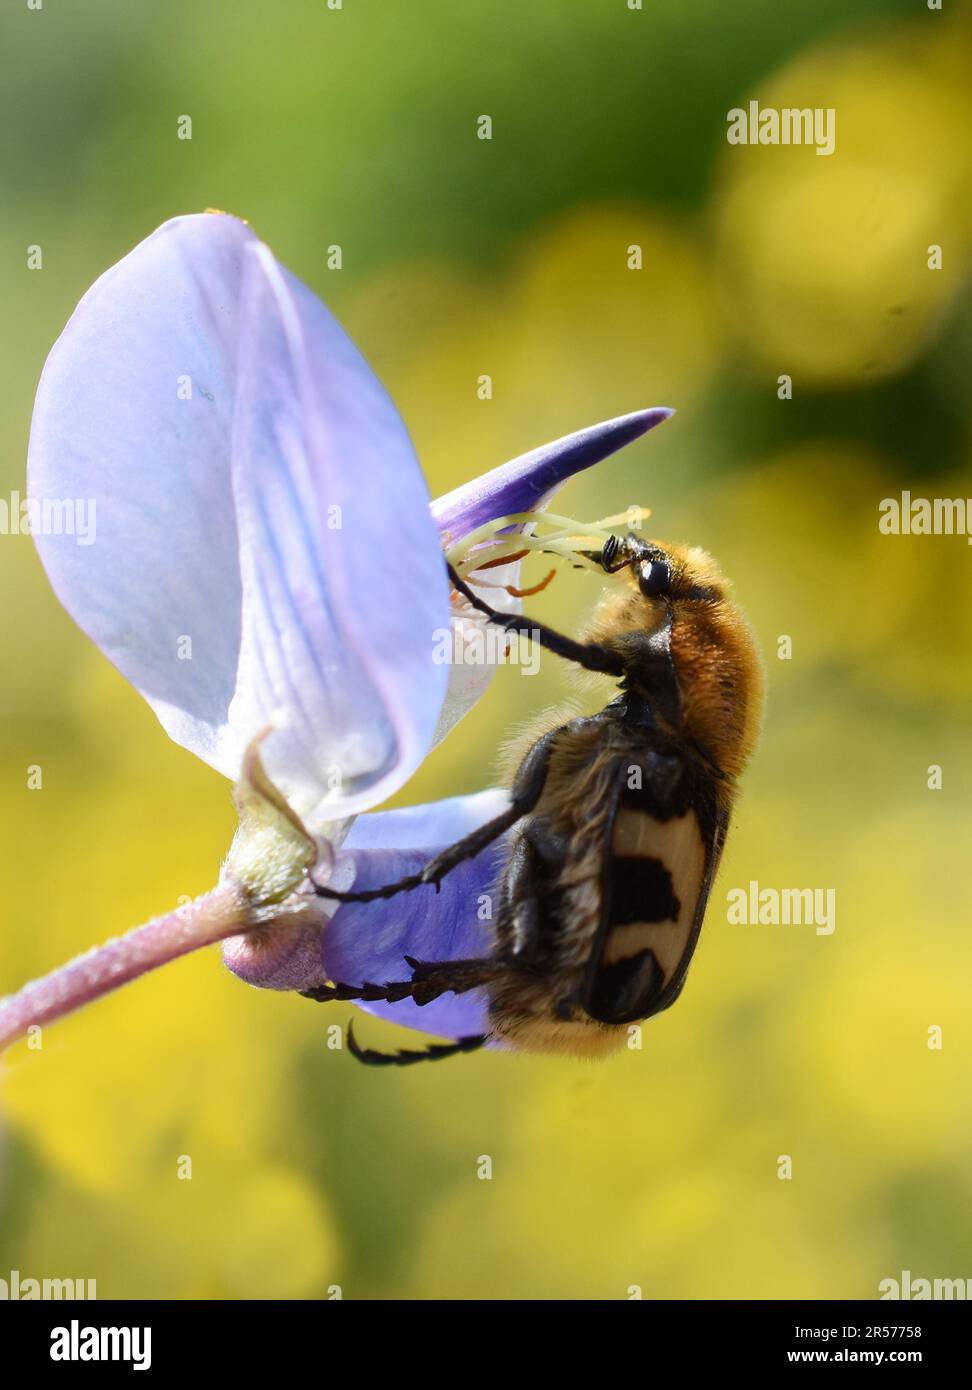 Ape Beetle Trichius fasciatus mimicry mangiare polline in un fiore blu Foto Stock